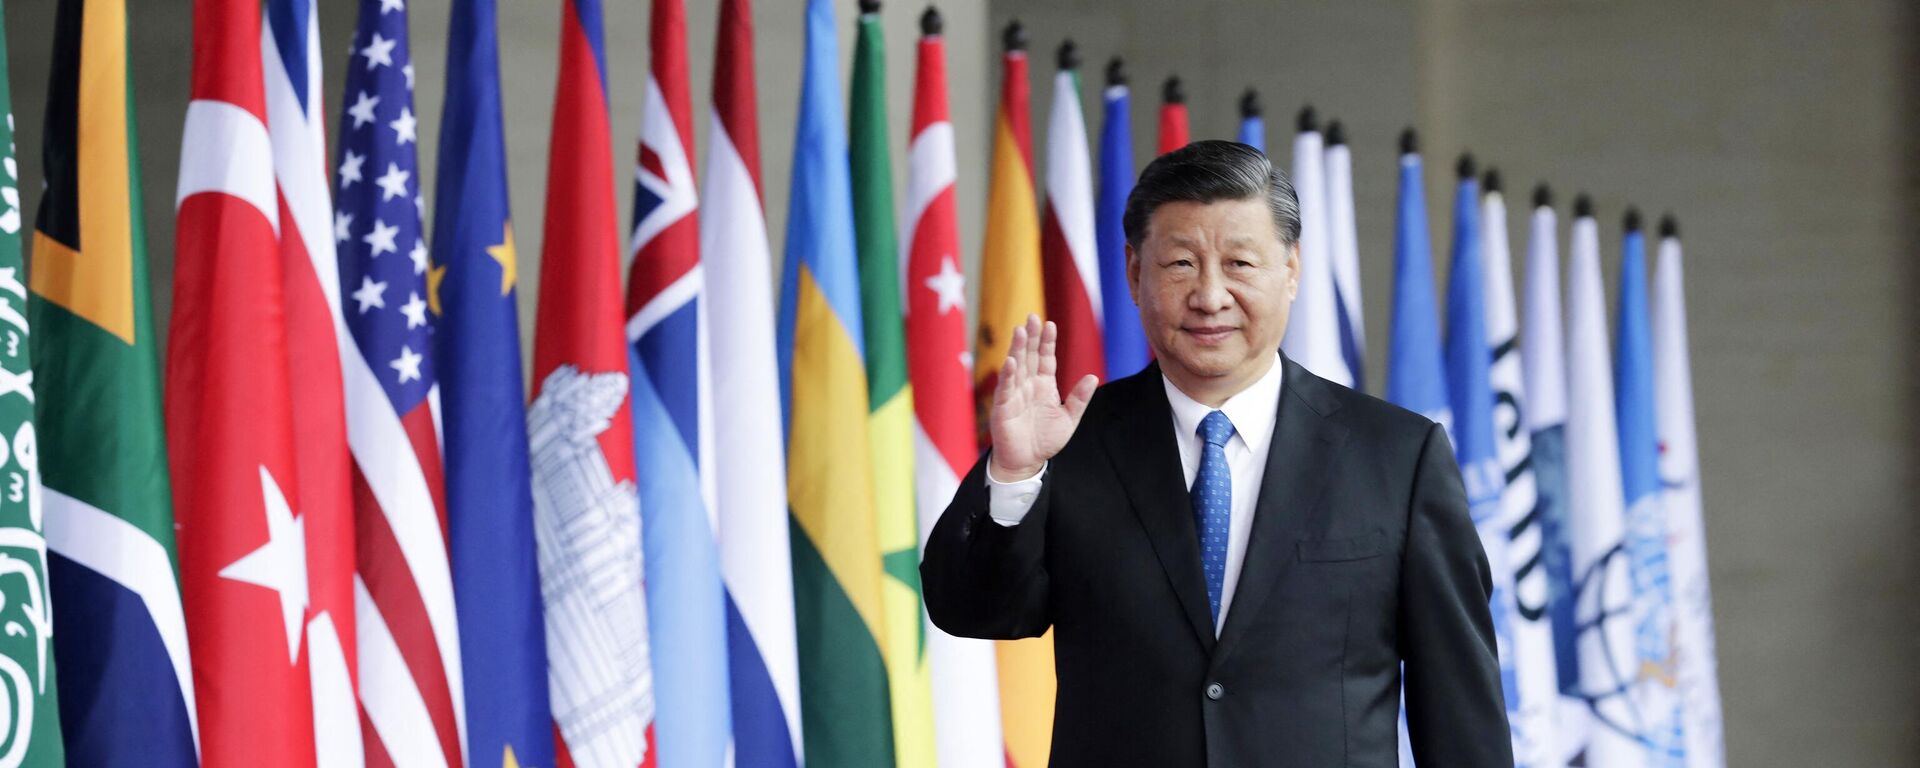 El presidente de China, Xi Jinping, durante la cumbre del G20 en Indonesia, en noviembre de 2022 - Sputnik Mundo, 1920, 17.11.2022